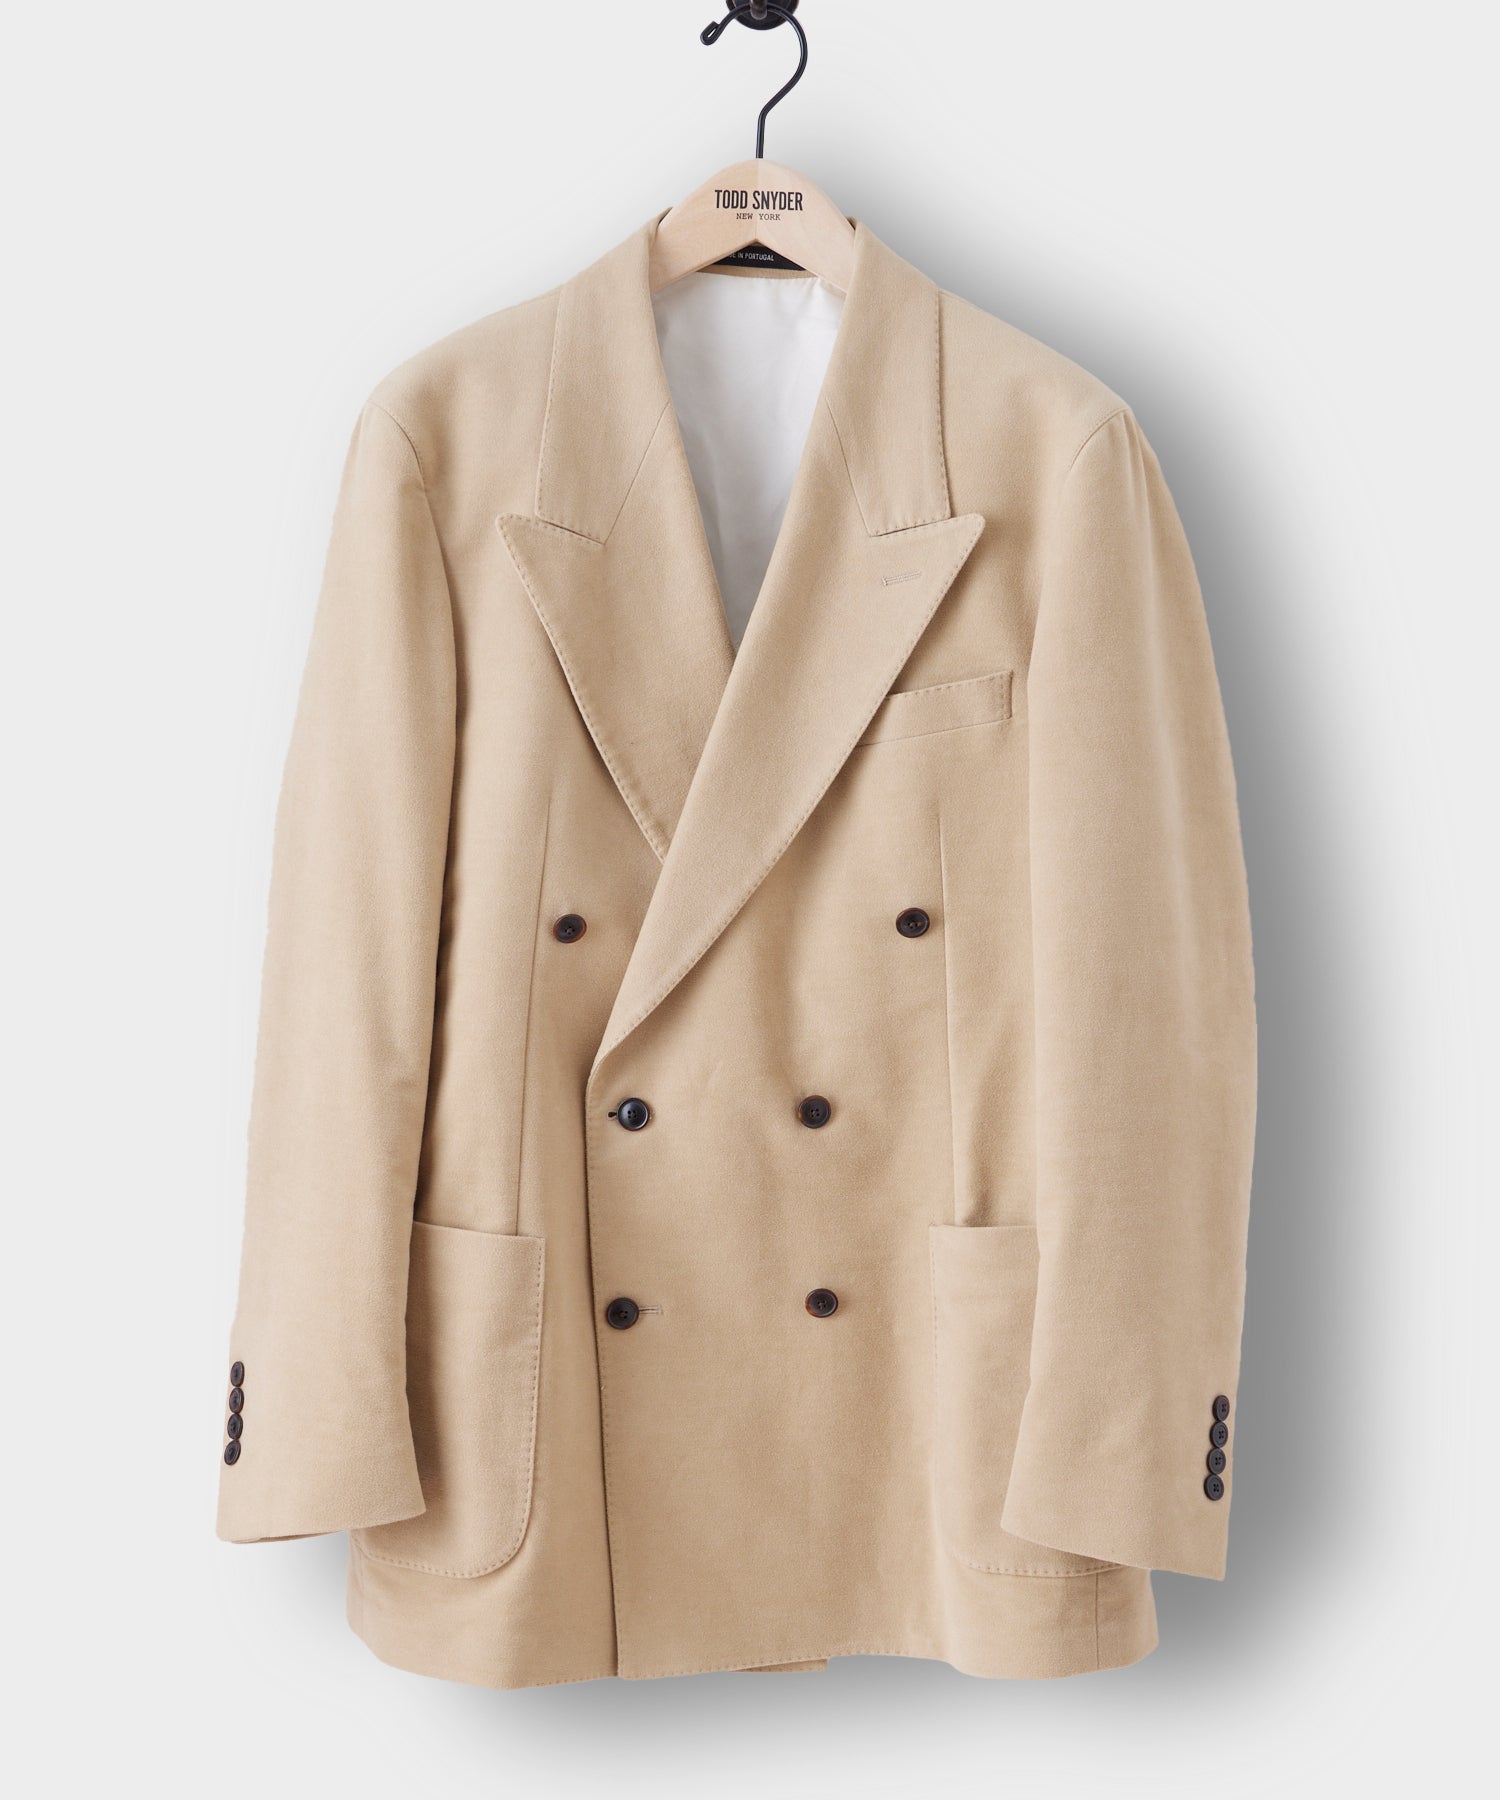 Men’s Vintage Style Suits, Classic Suits Moleskin Double-Breasted Madison Suit Jacket $698.00 AT vintagedancer.com